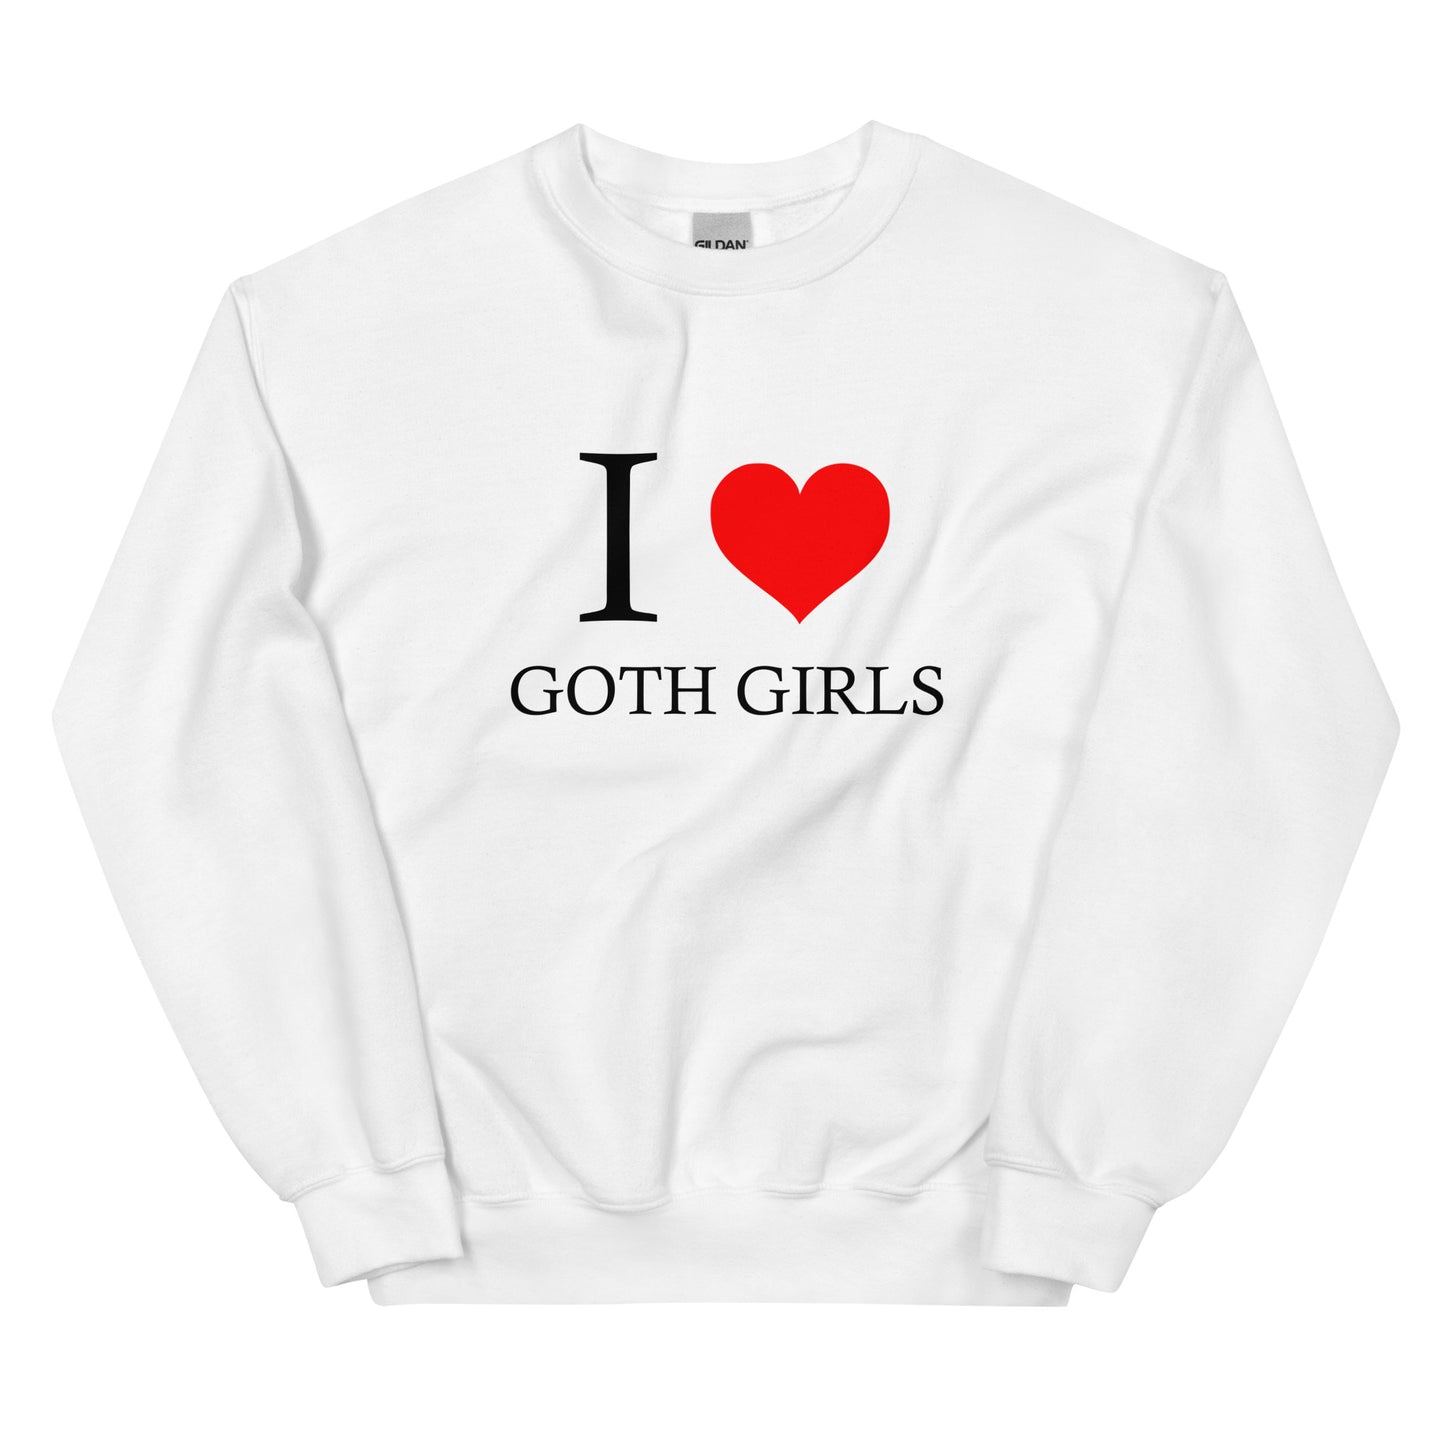 "I Love Goth Girls" Sweatshirt